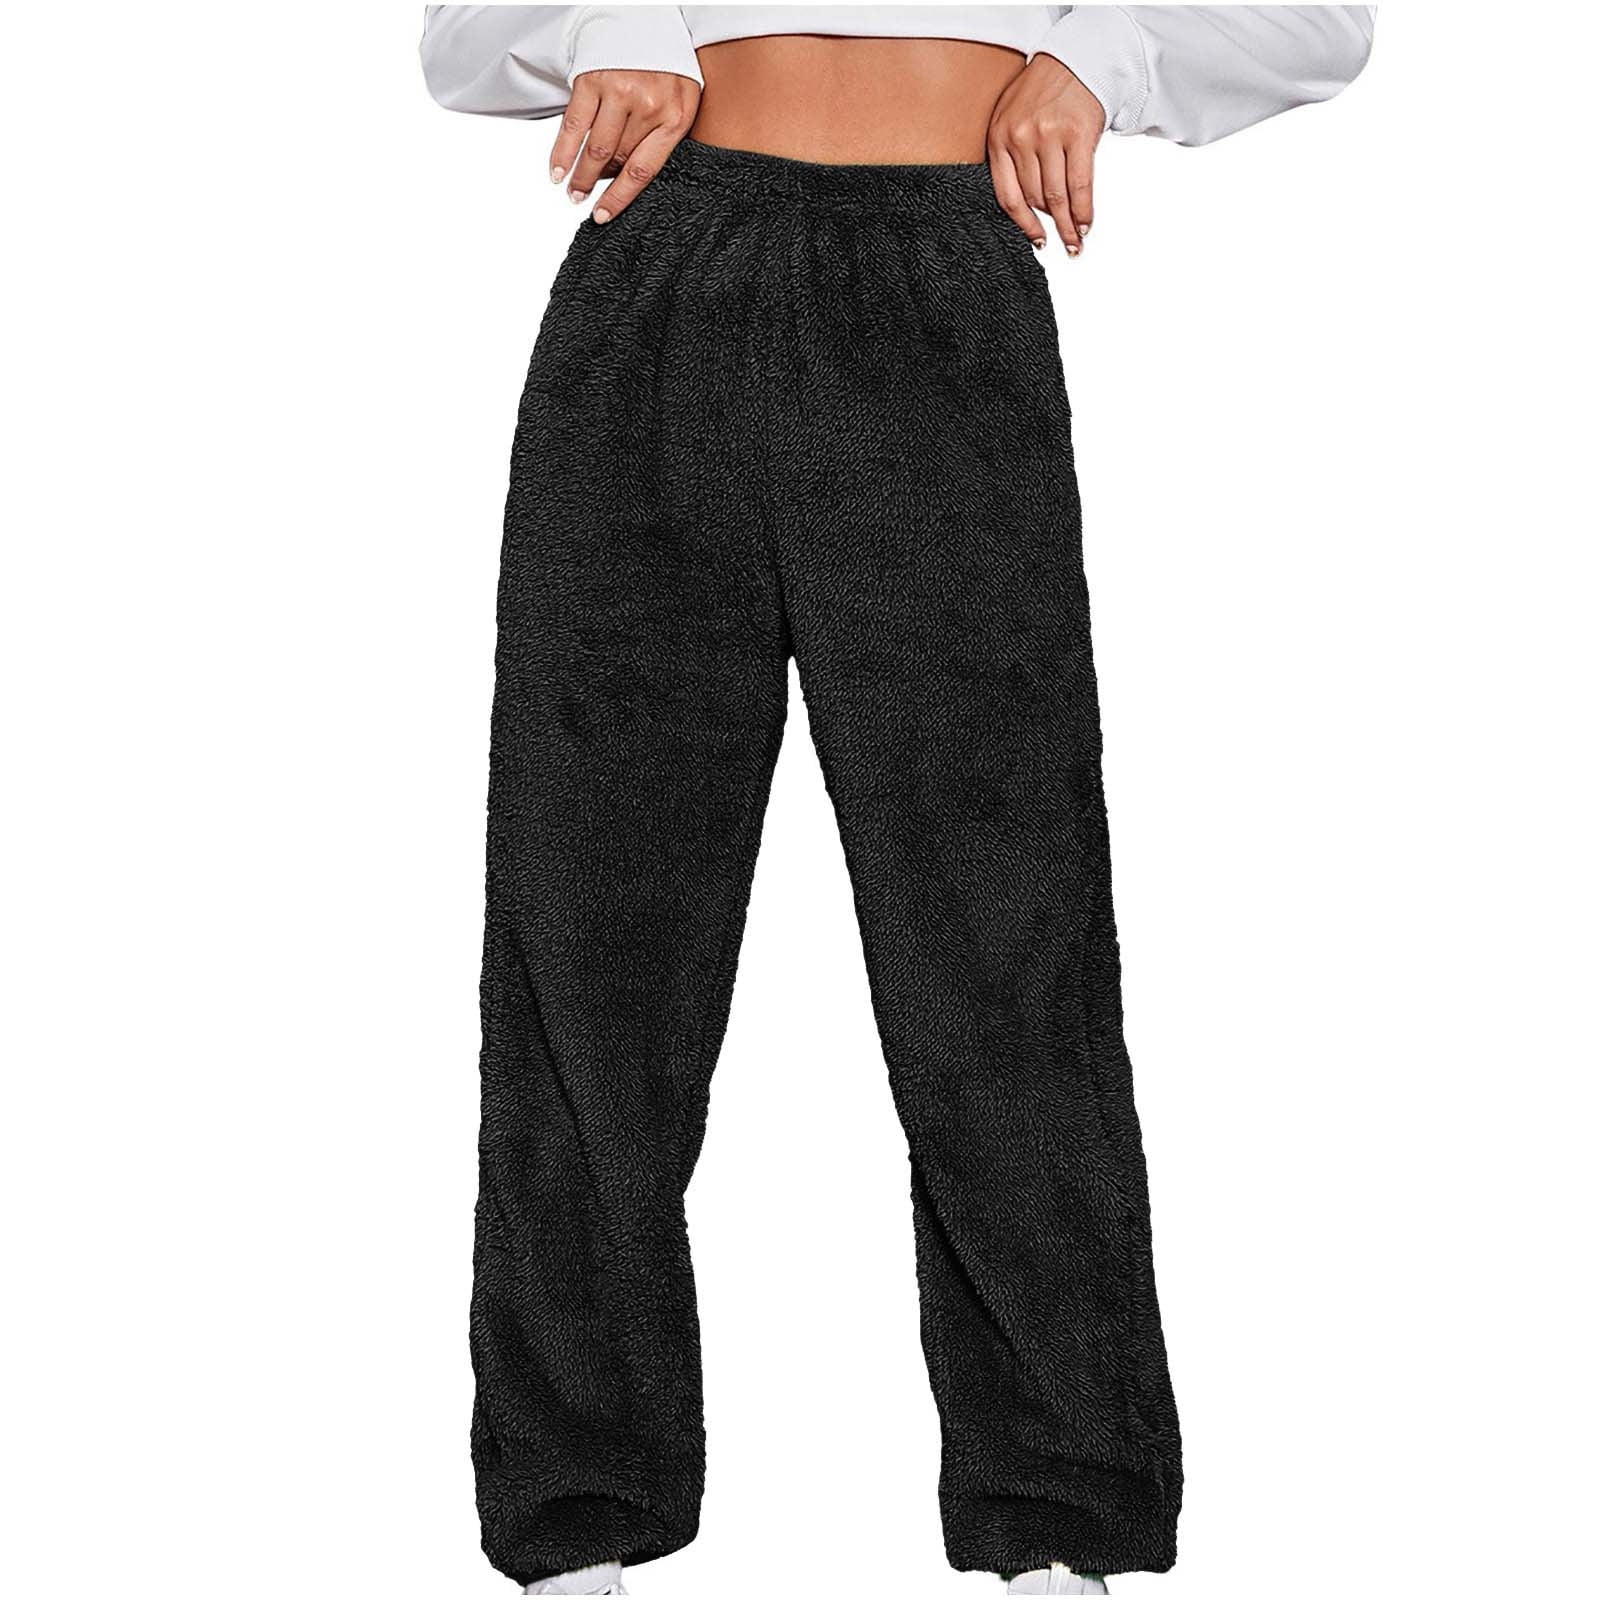 Womens Winter Cozy Lounge Pants Warm Soft Fuzzy Fleece Pajama Bottoms ...